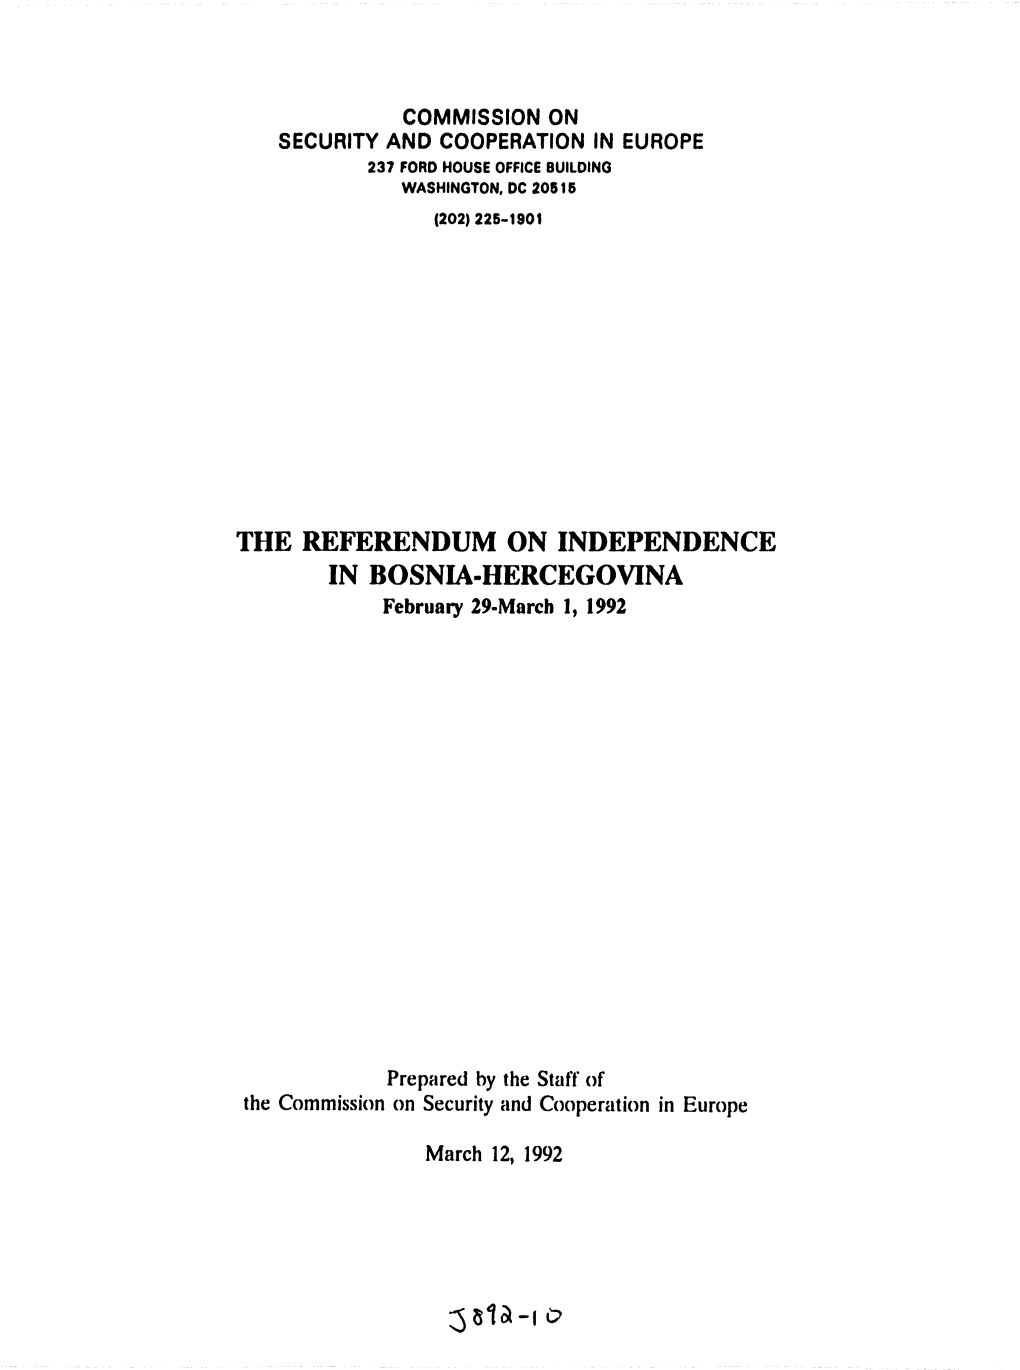 REFERENDUM on INDEPENDENCE in BOSNIA-HERCEGOVINA February 29-March 1, 1992